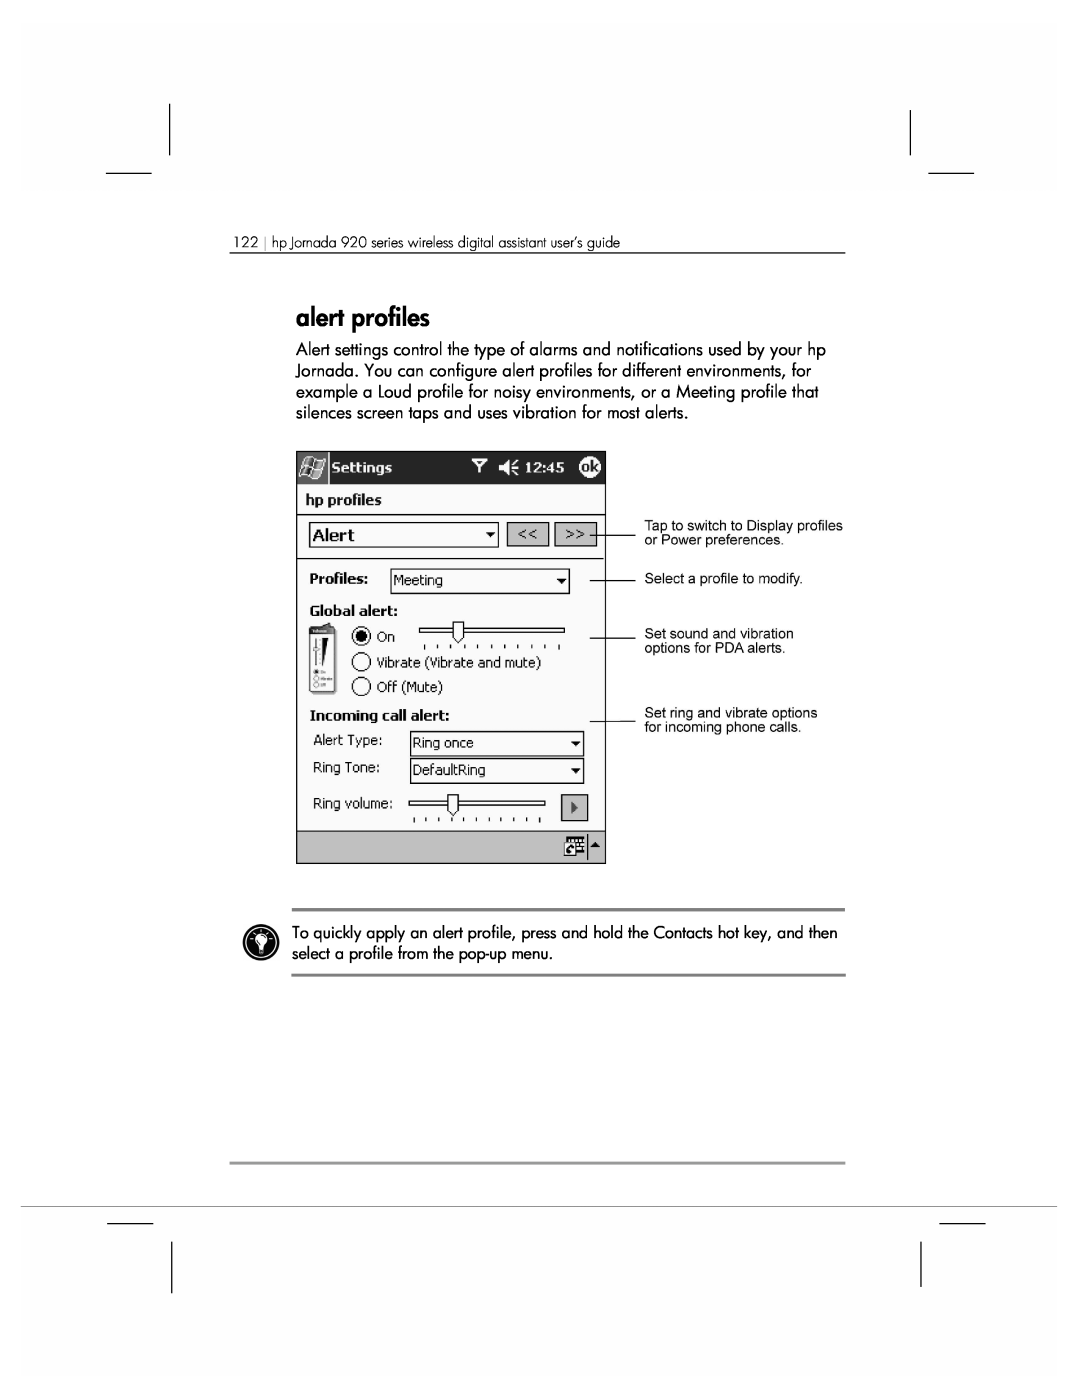 HP manual alert profiles, hp Jornada 920 series wireless digital assistant user’s guide 